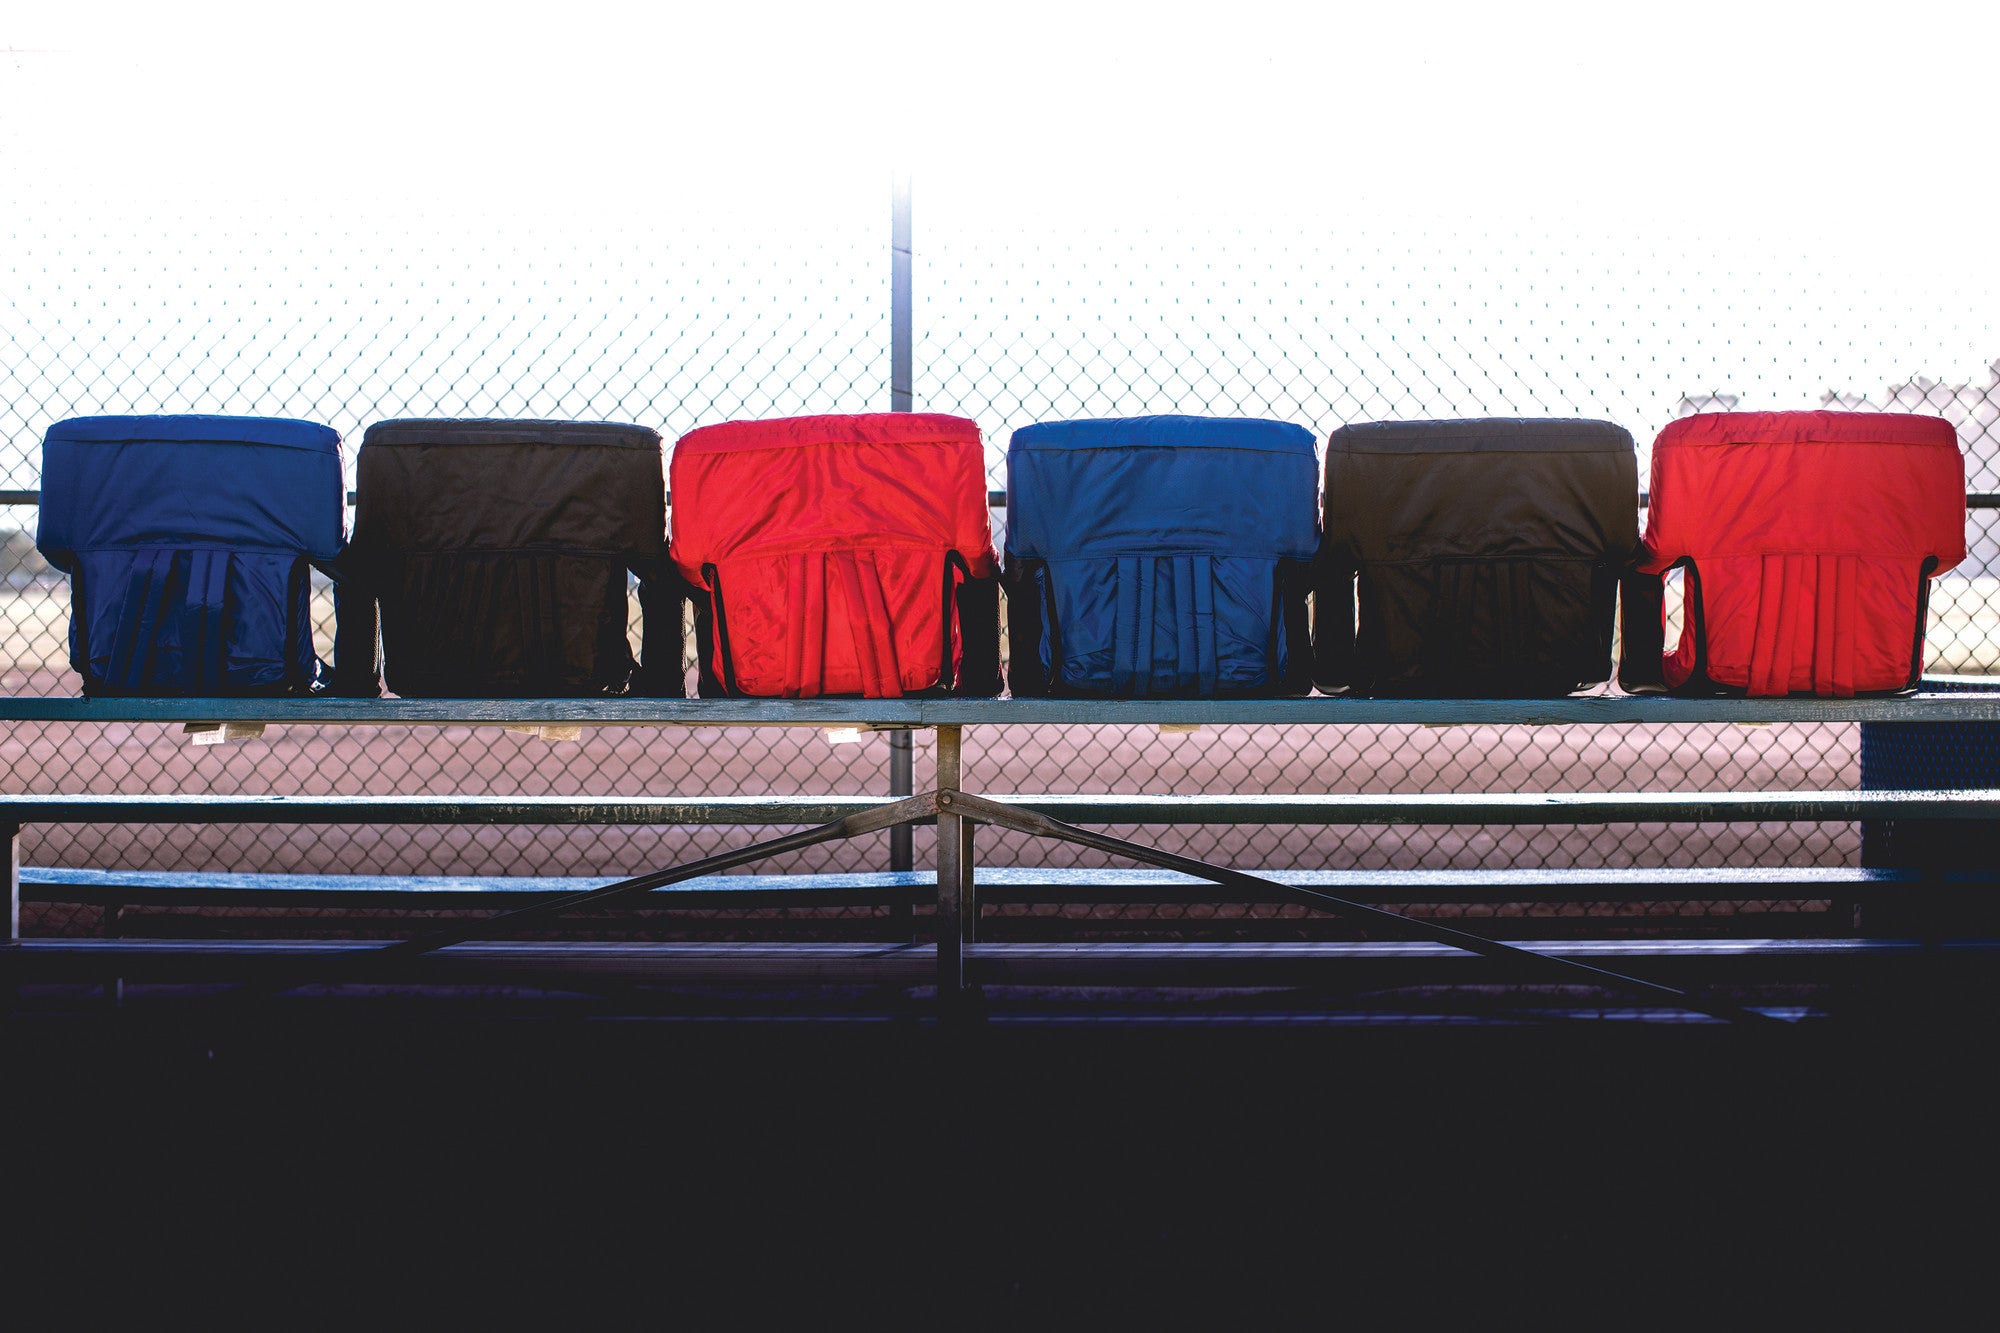 Columbus Blue Jackets - Ventura Portable Reclining Stadium Seat